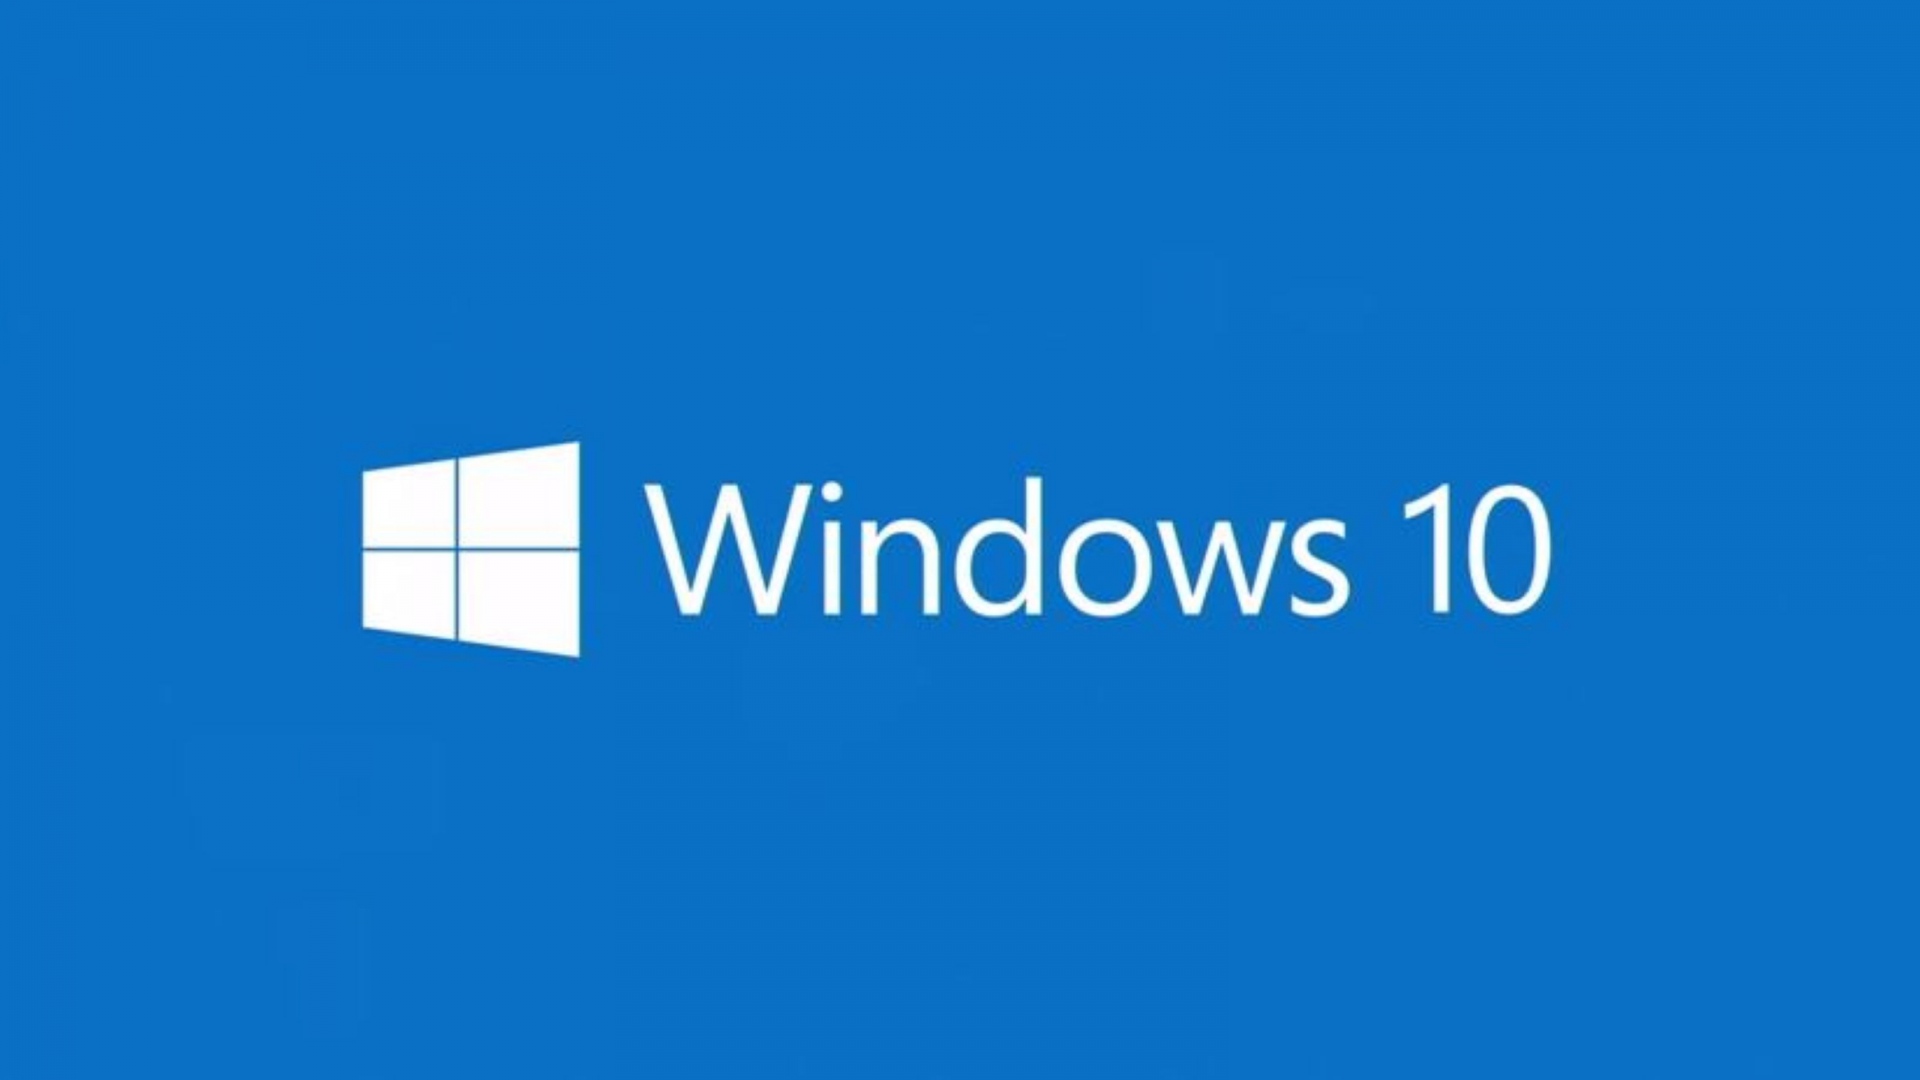  windows 10 technical preview windows 10 logo microsoft 975431920x1080